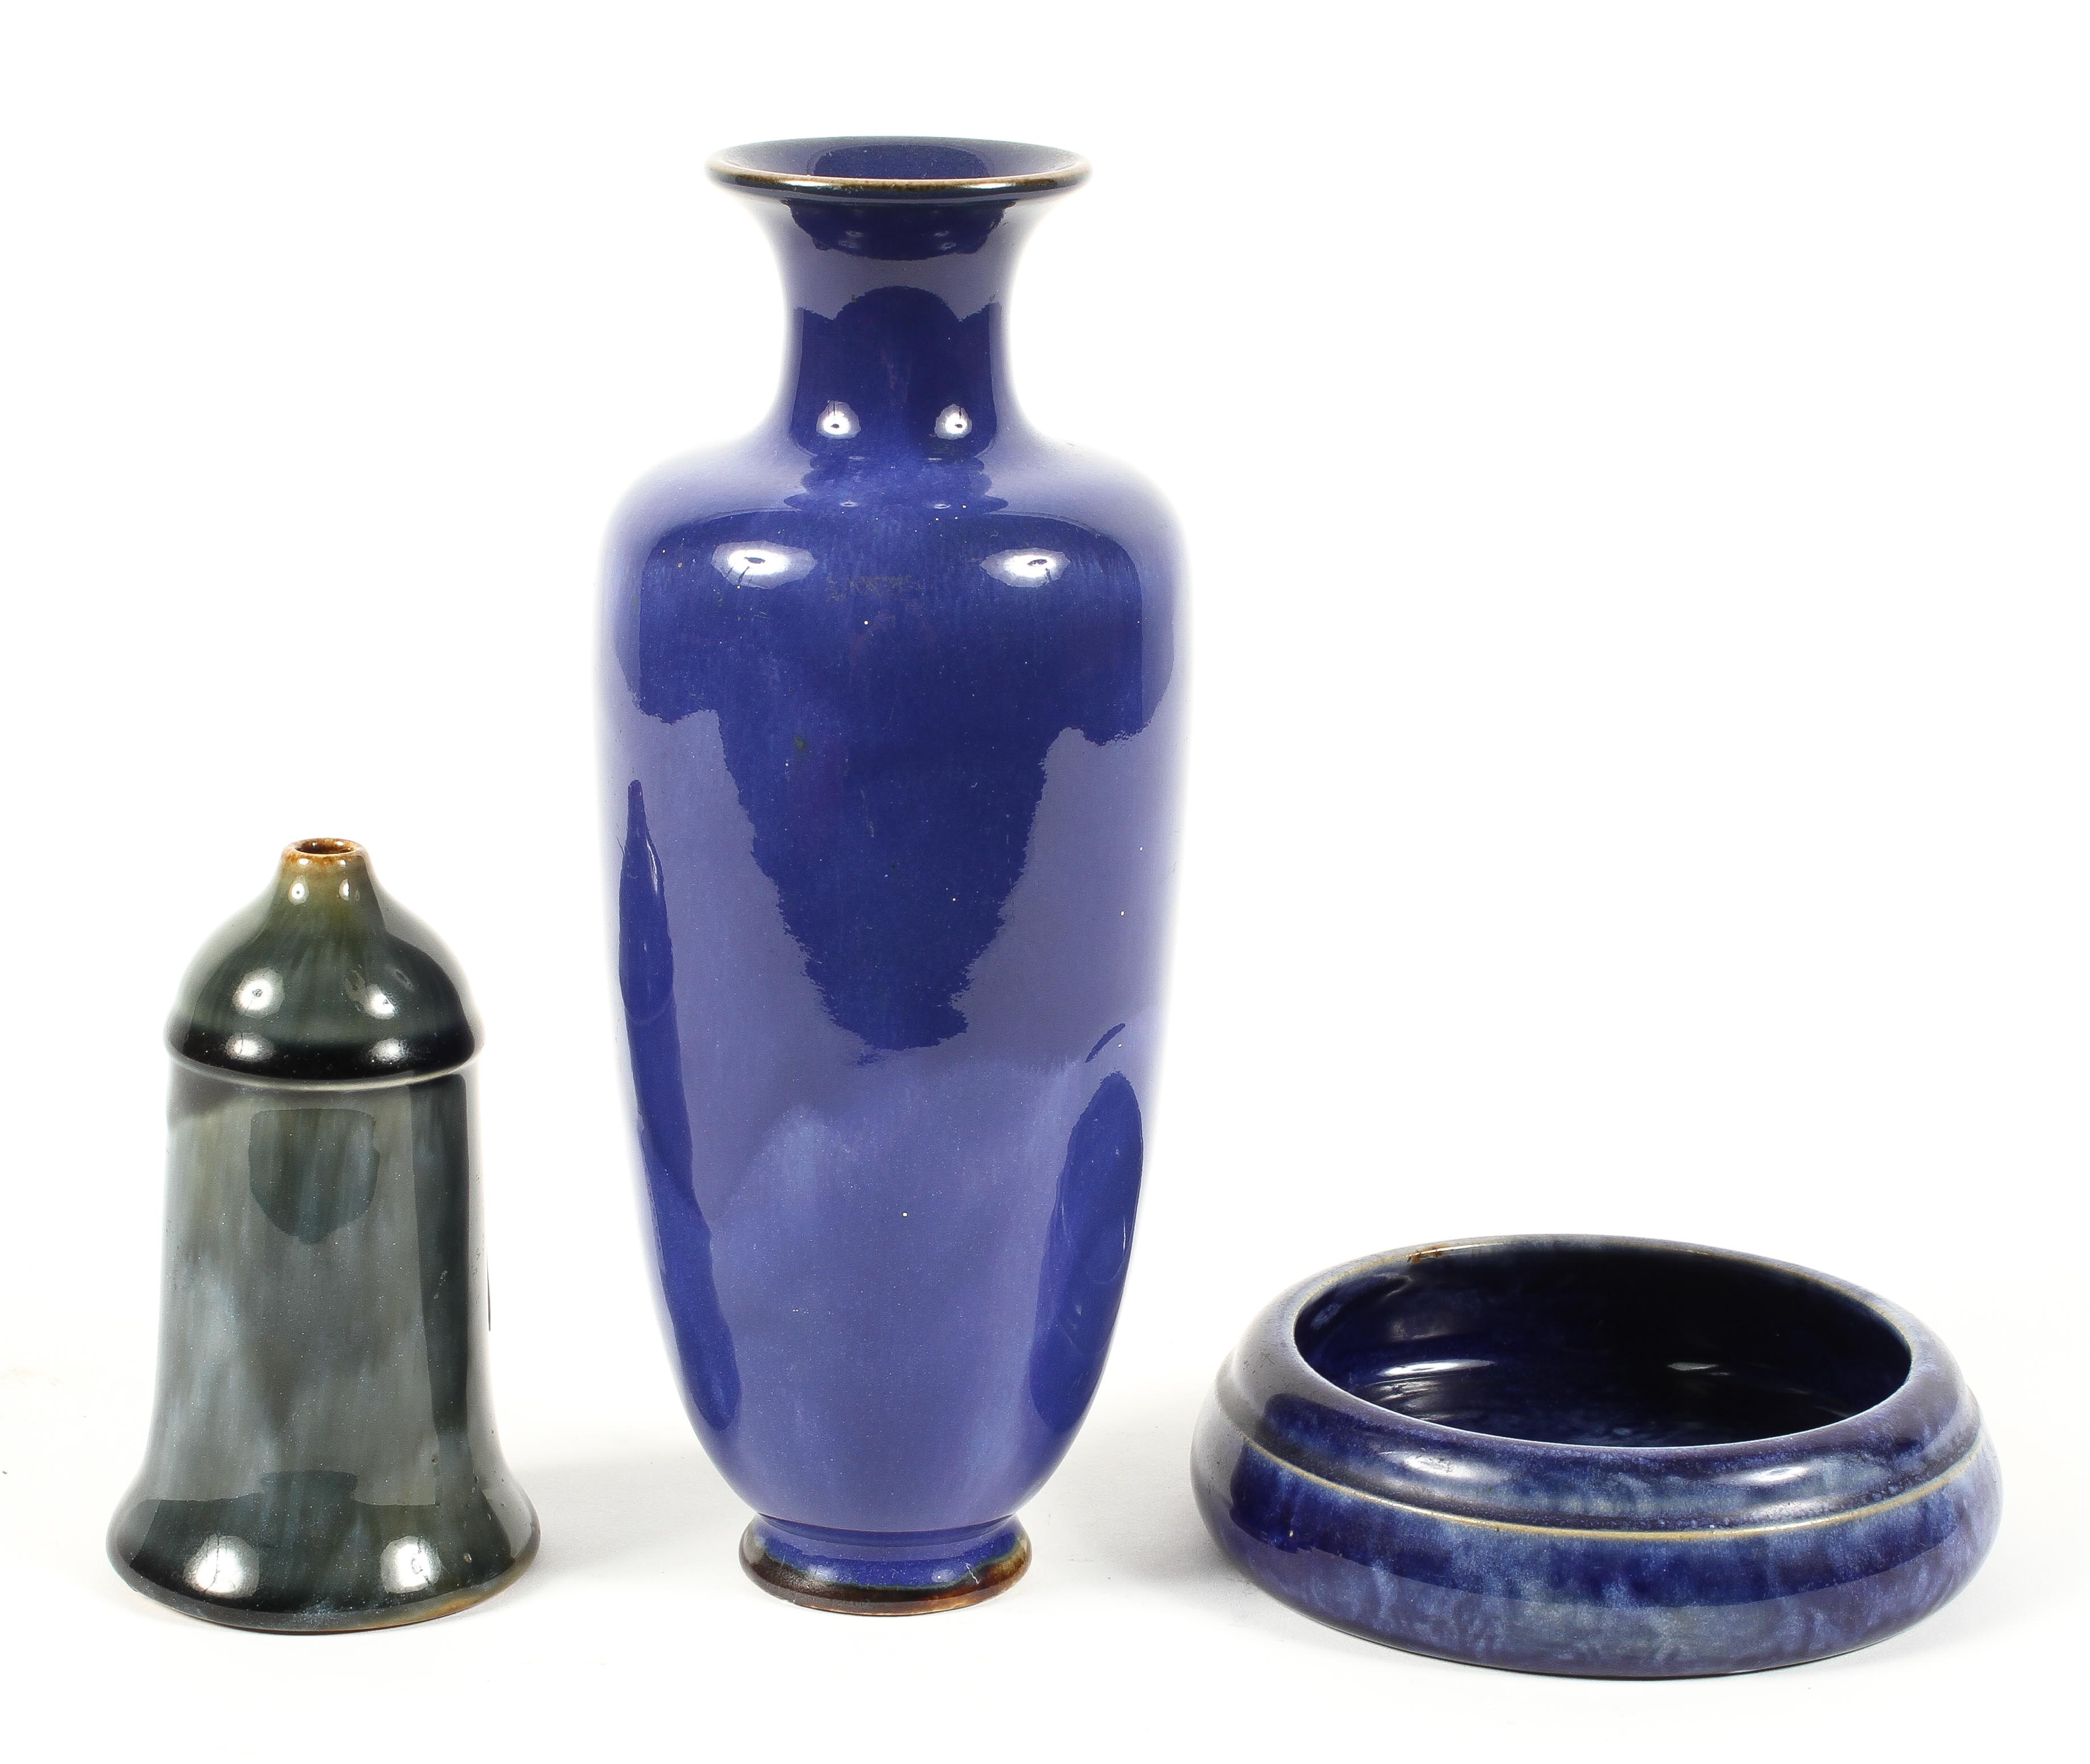 Three Royal Doulton glazed stonewares, late 19th century, impressed marks,